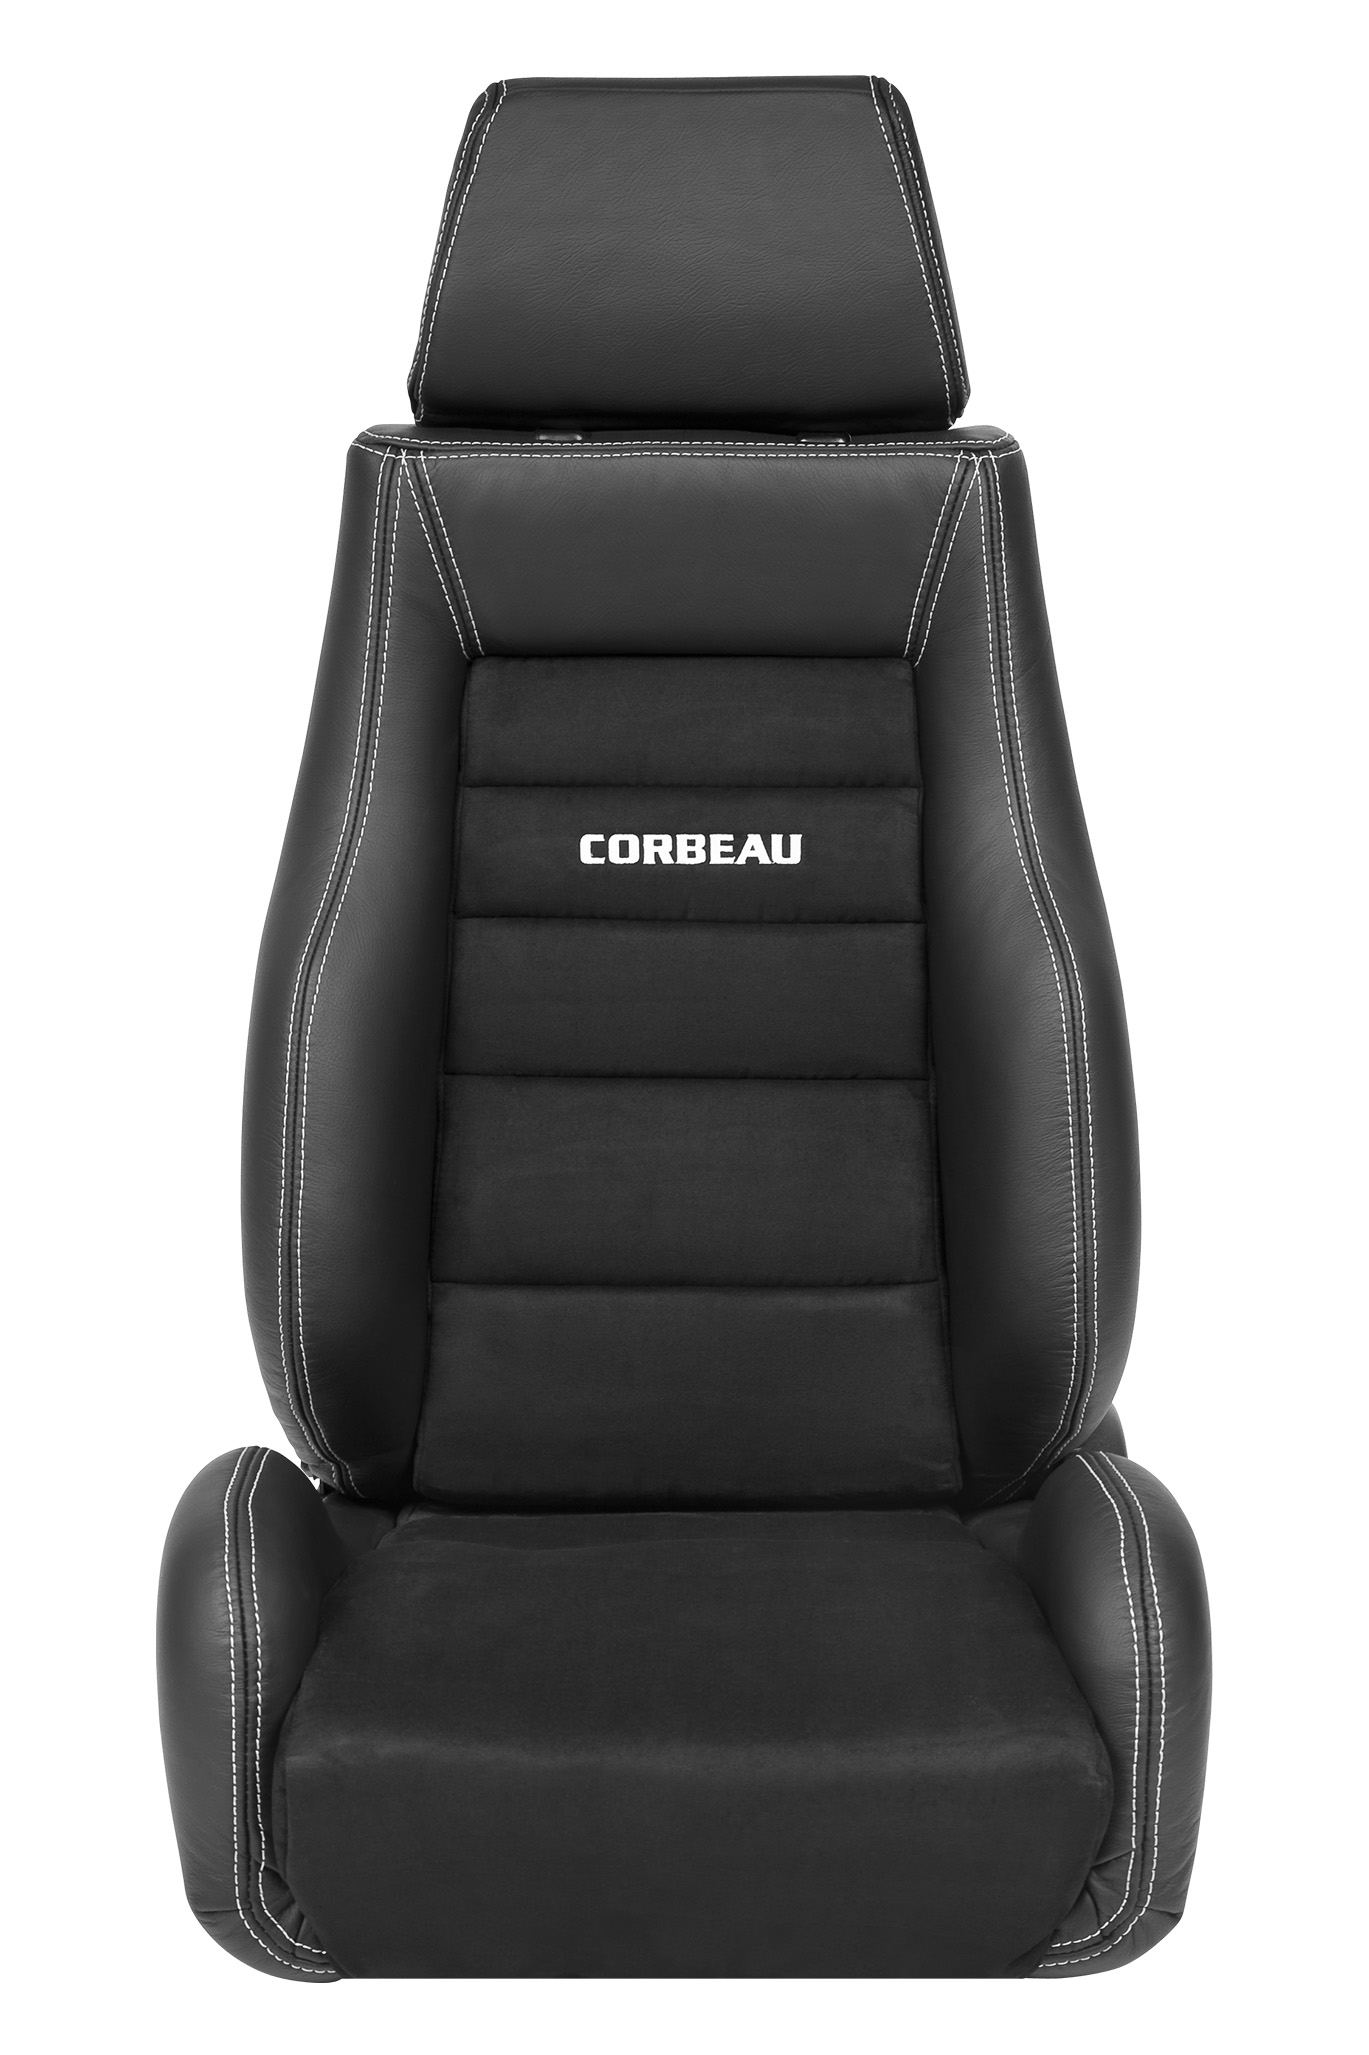 Pro Touring Seats - Corbeau GTS II - Reclining - Adjustable